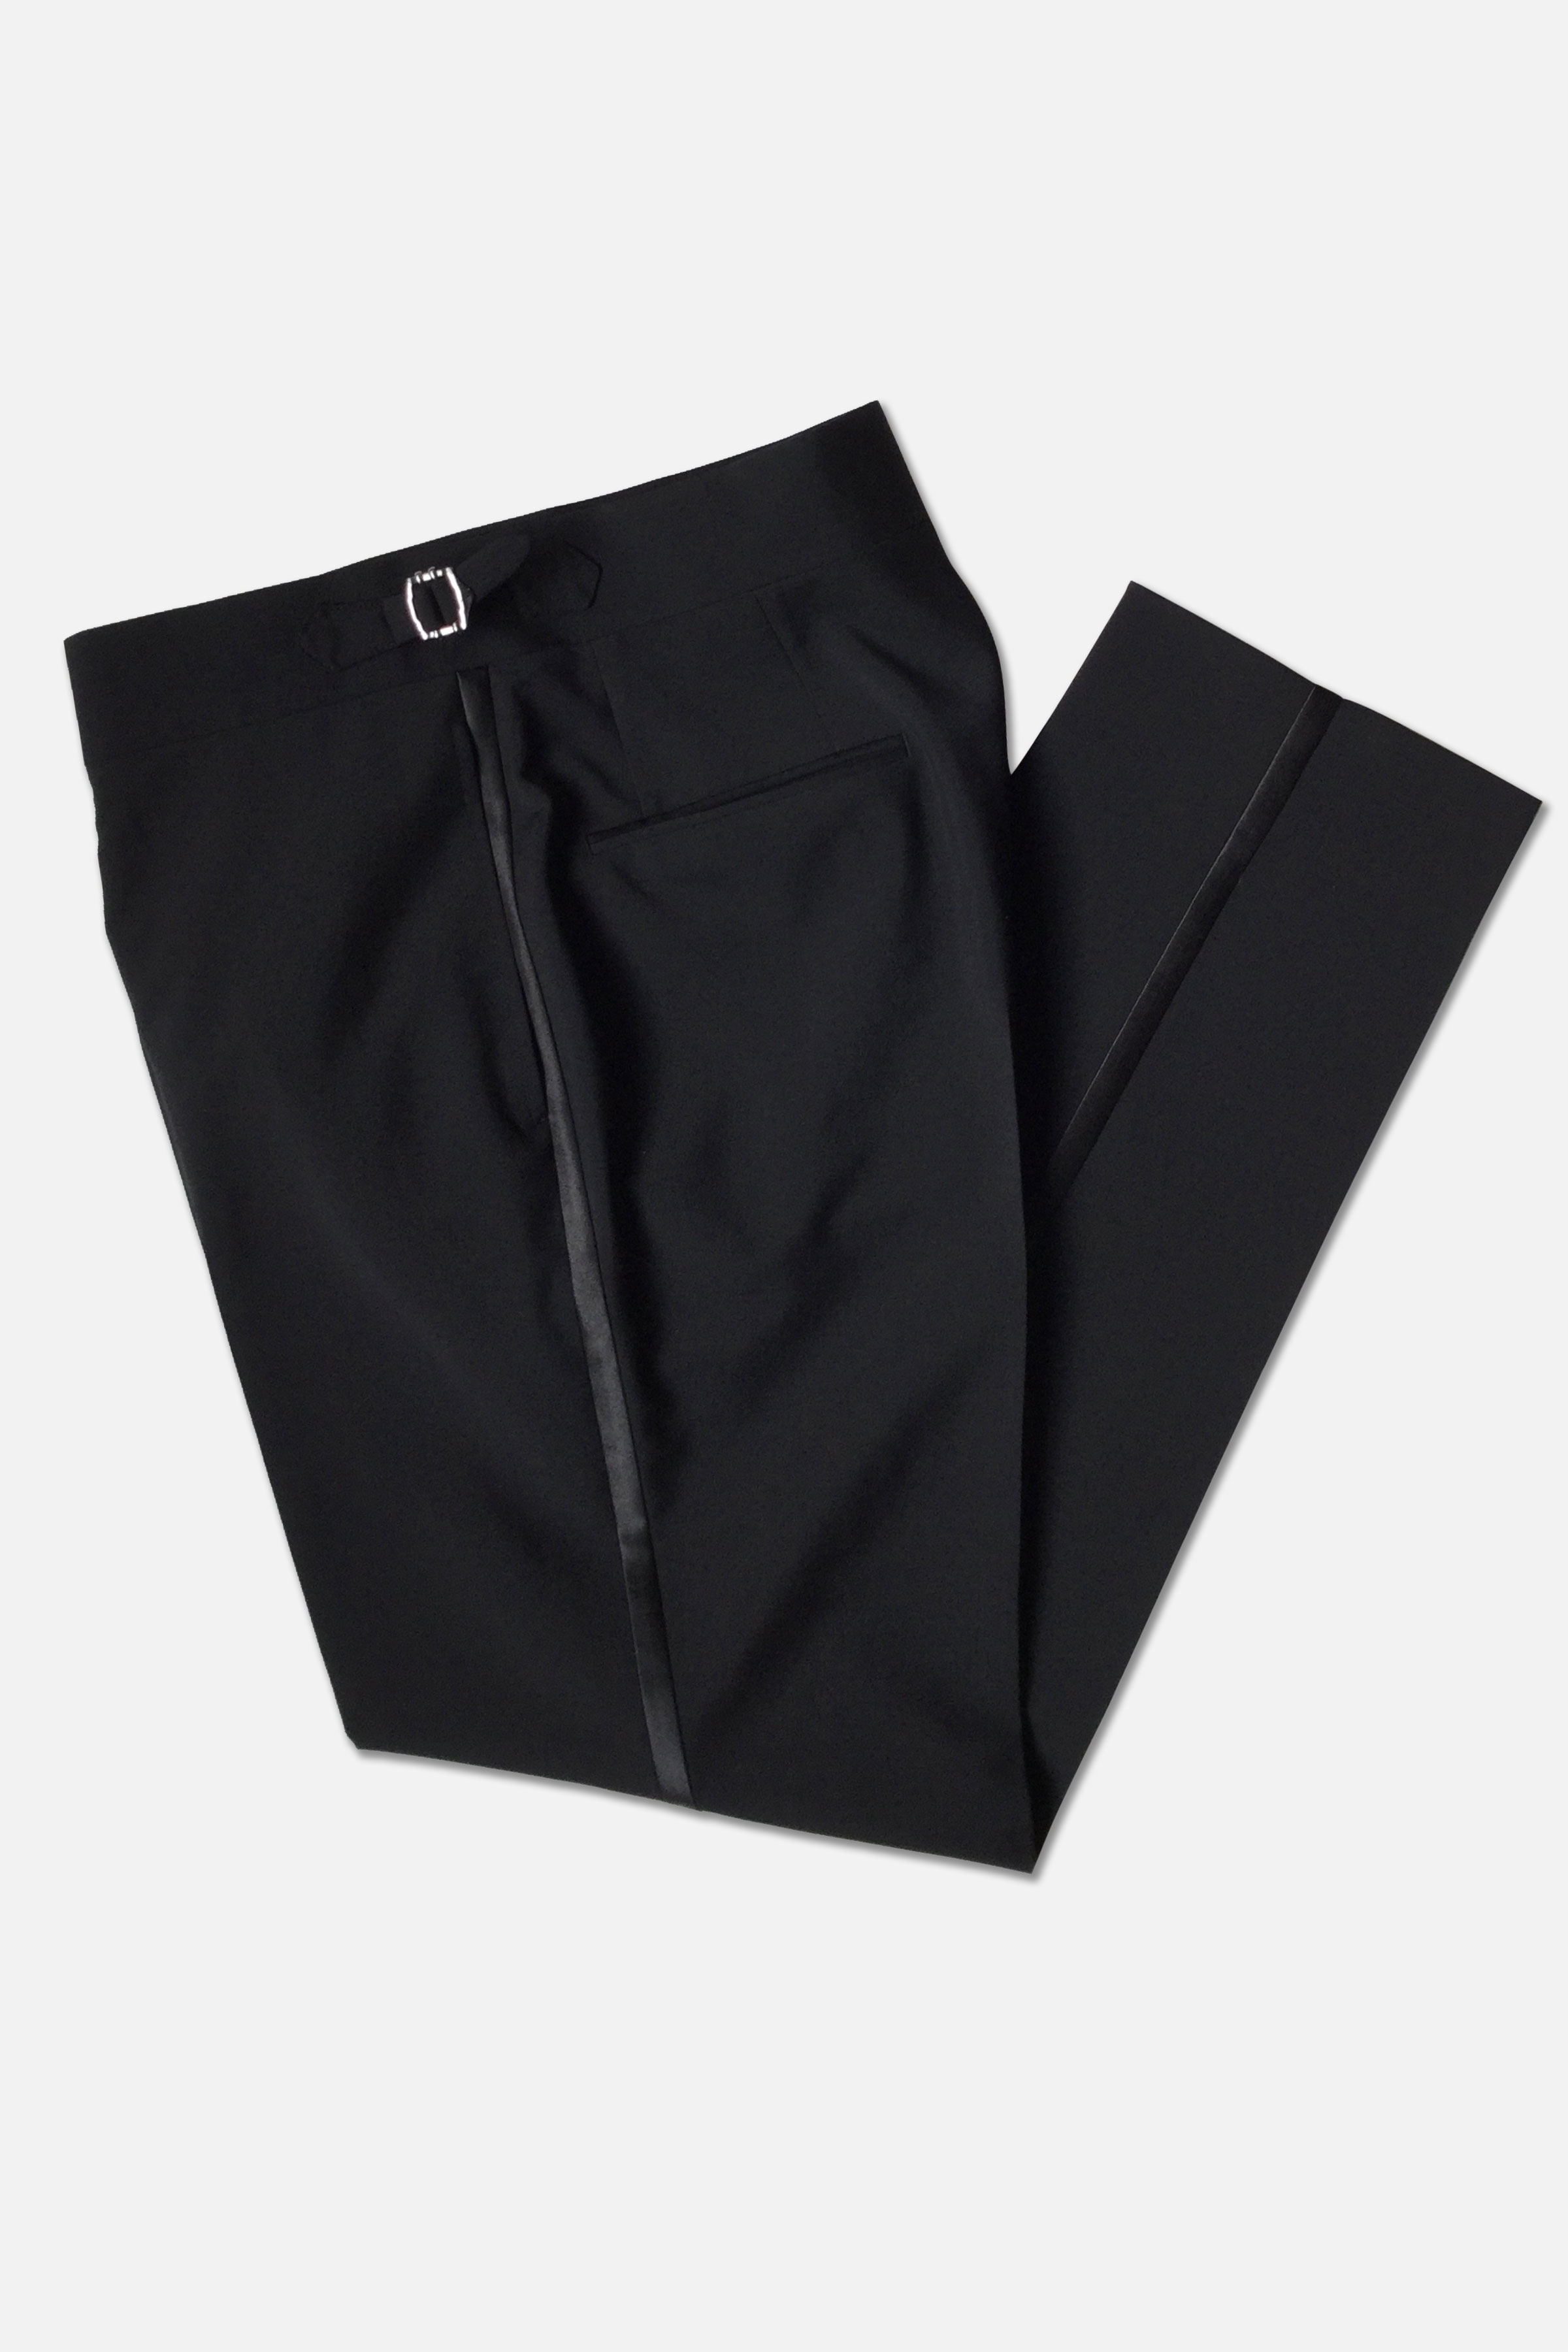 Vitale Barberis Canonico Black Tuxedo Trousers by Knot Standard